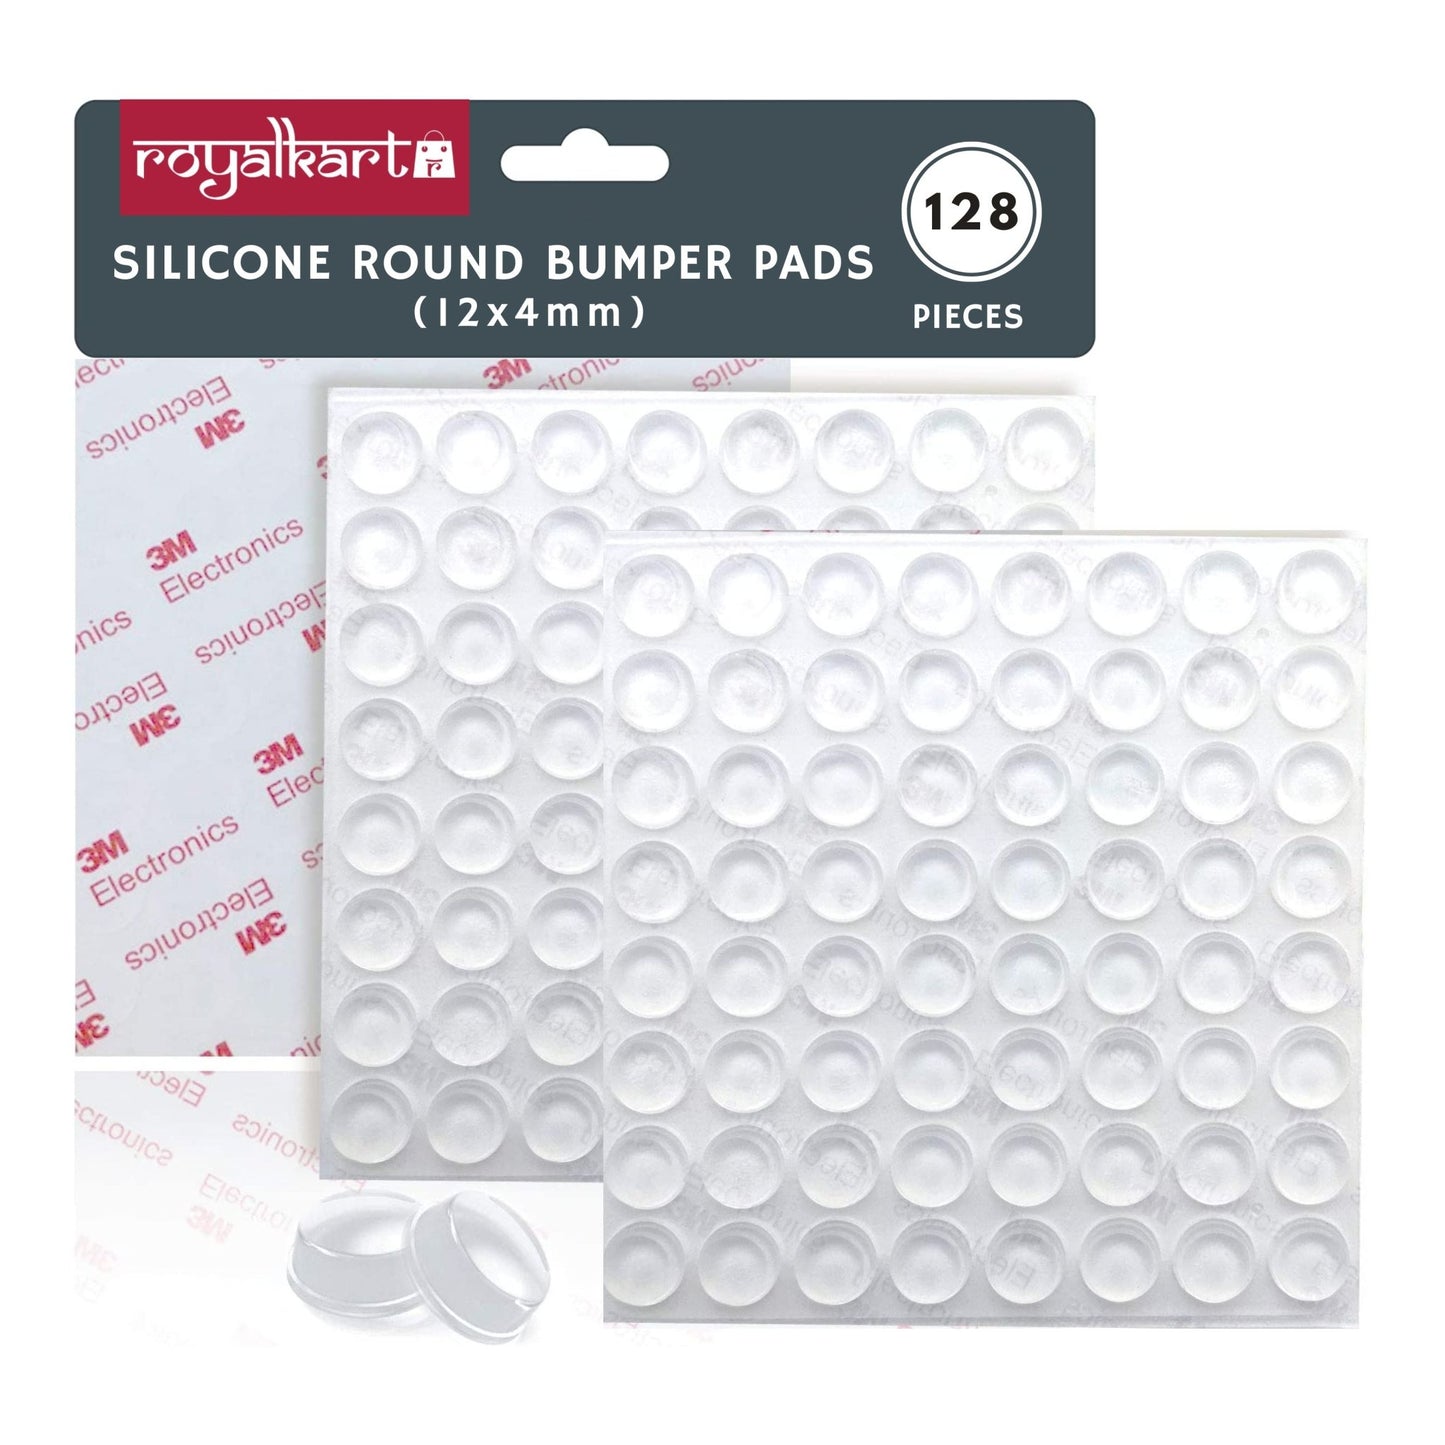 Silicone Bumper Pads For Furniture furniture pads- #Royalkart#bumper pads